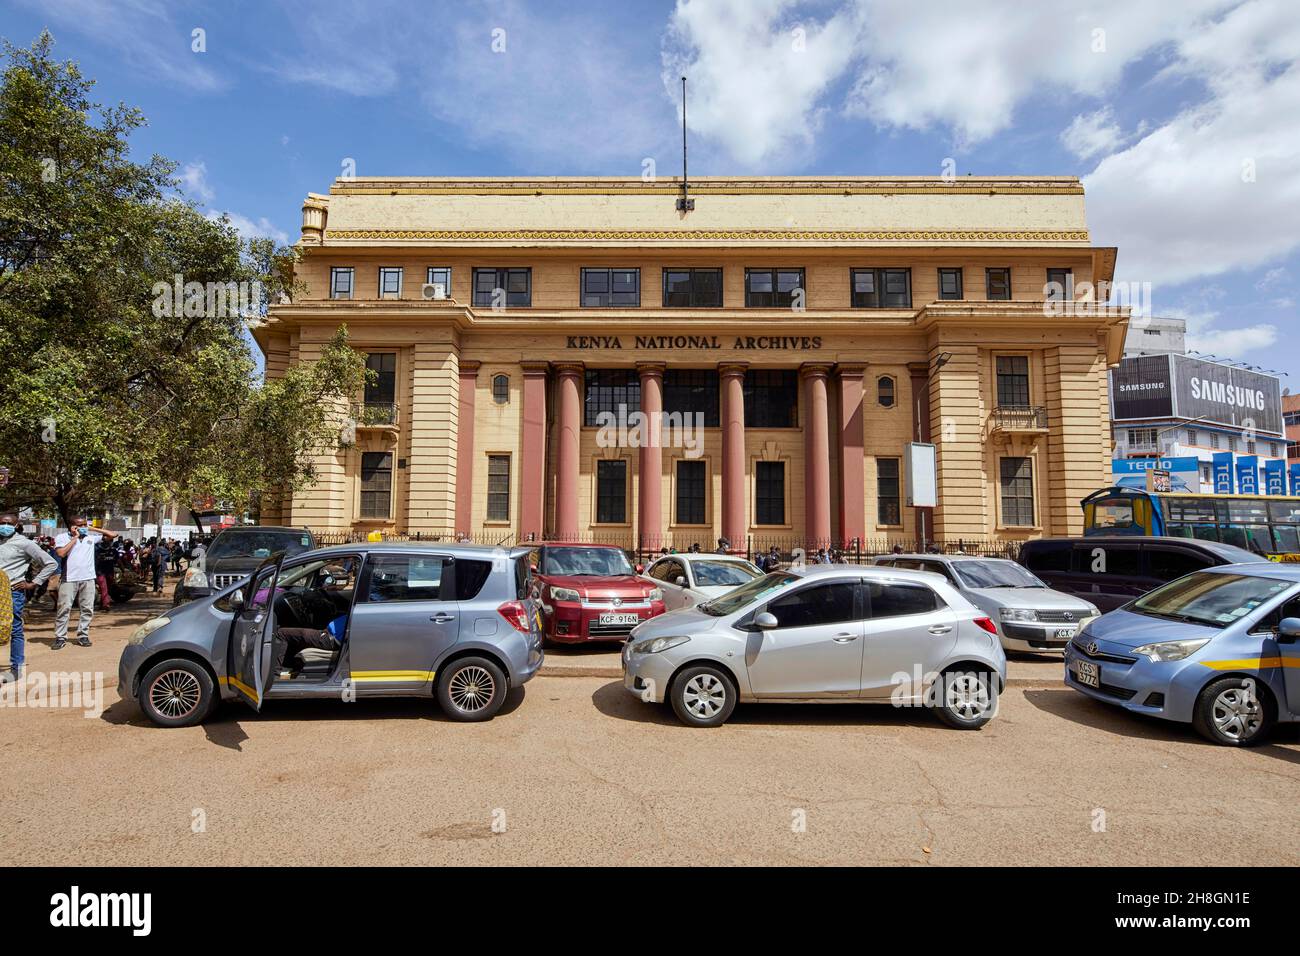 Kenya National Archives in Nairobi Kenia Afrika Stockfoto